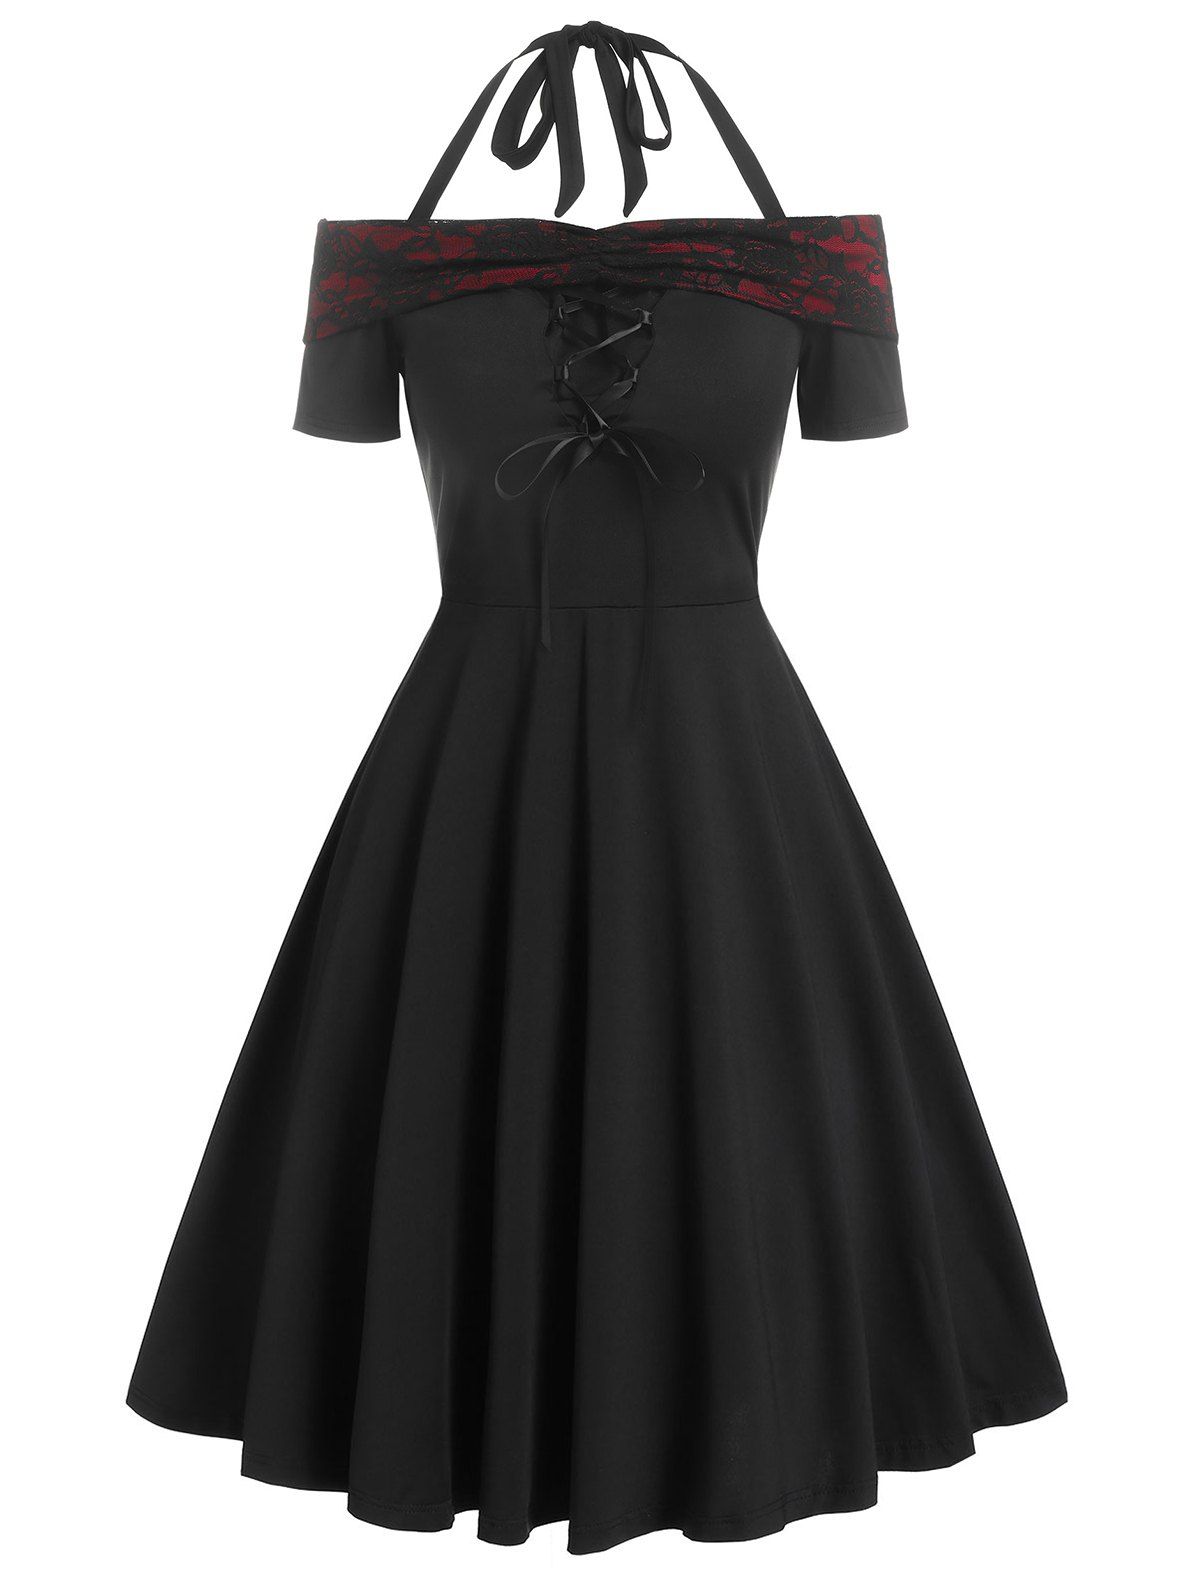 Gothic Off The Shoulder Lace Up Halter Short Sleeve Dress - BLACK XXL